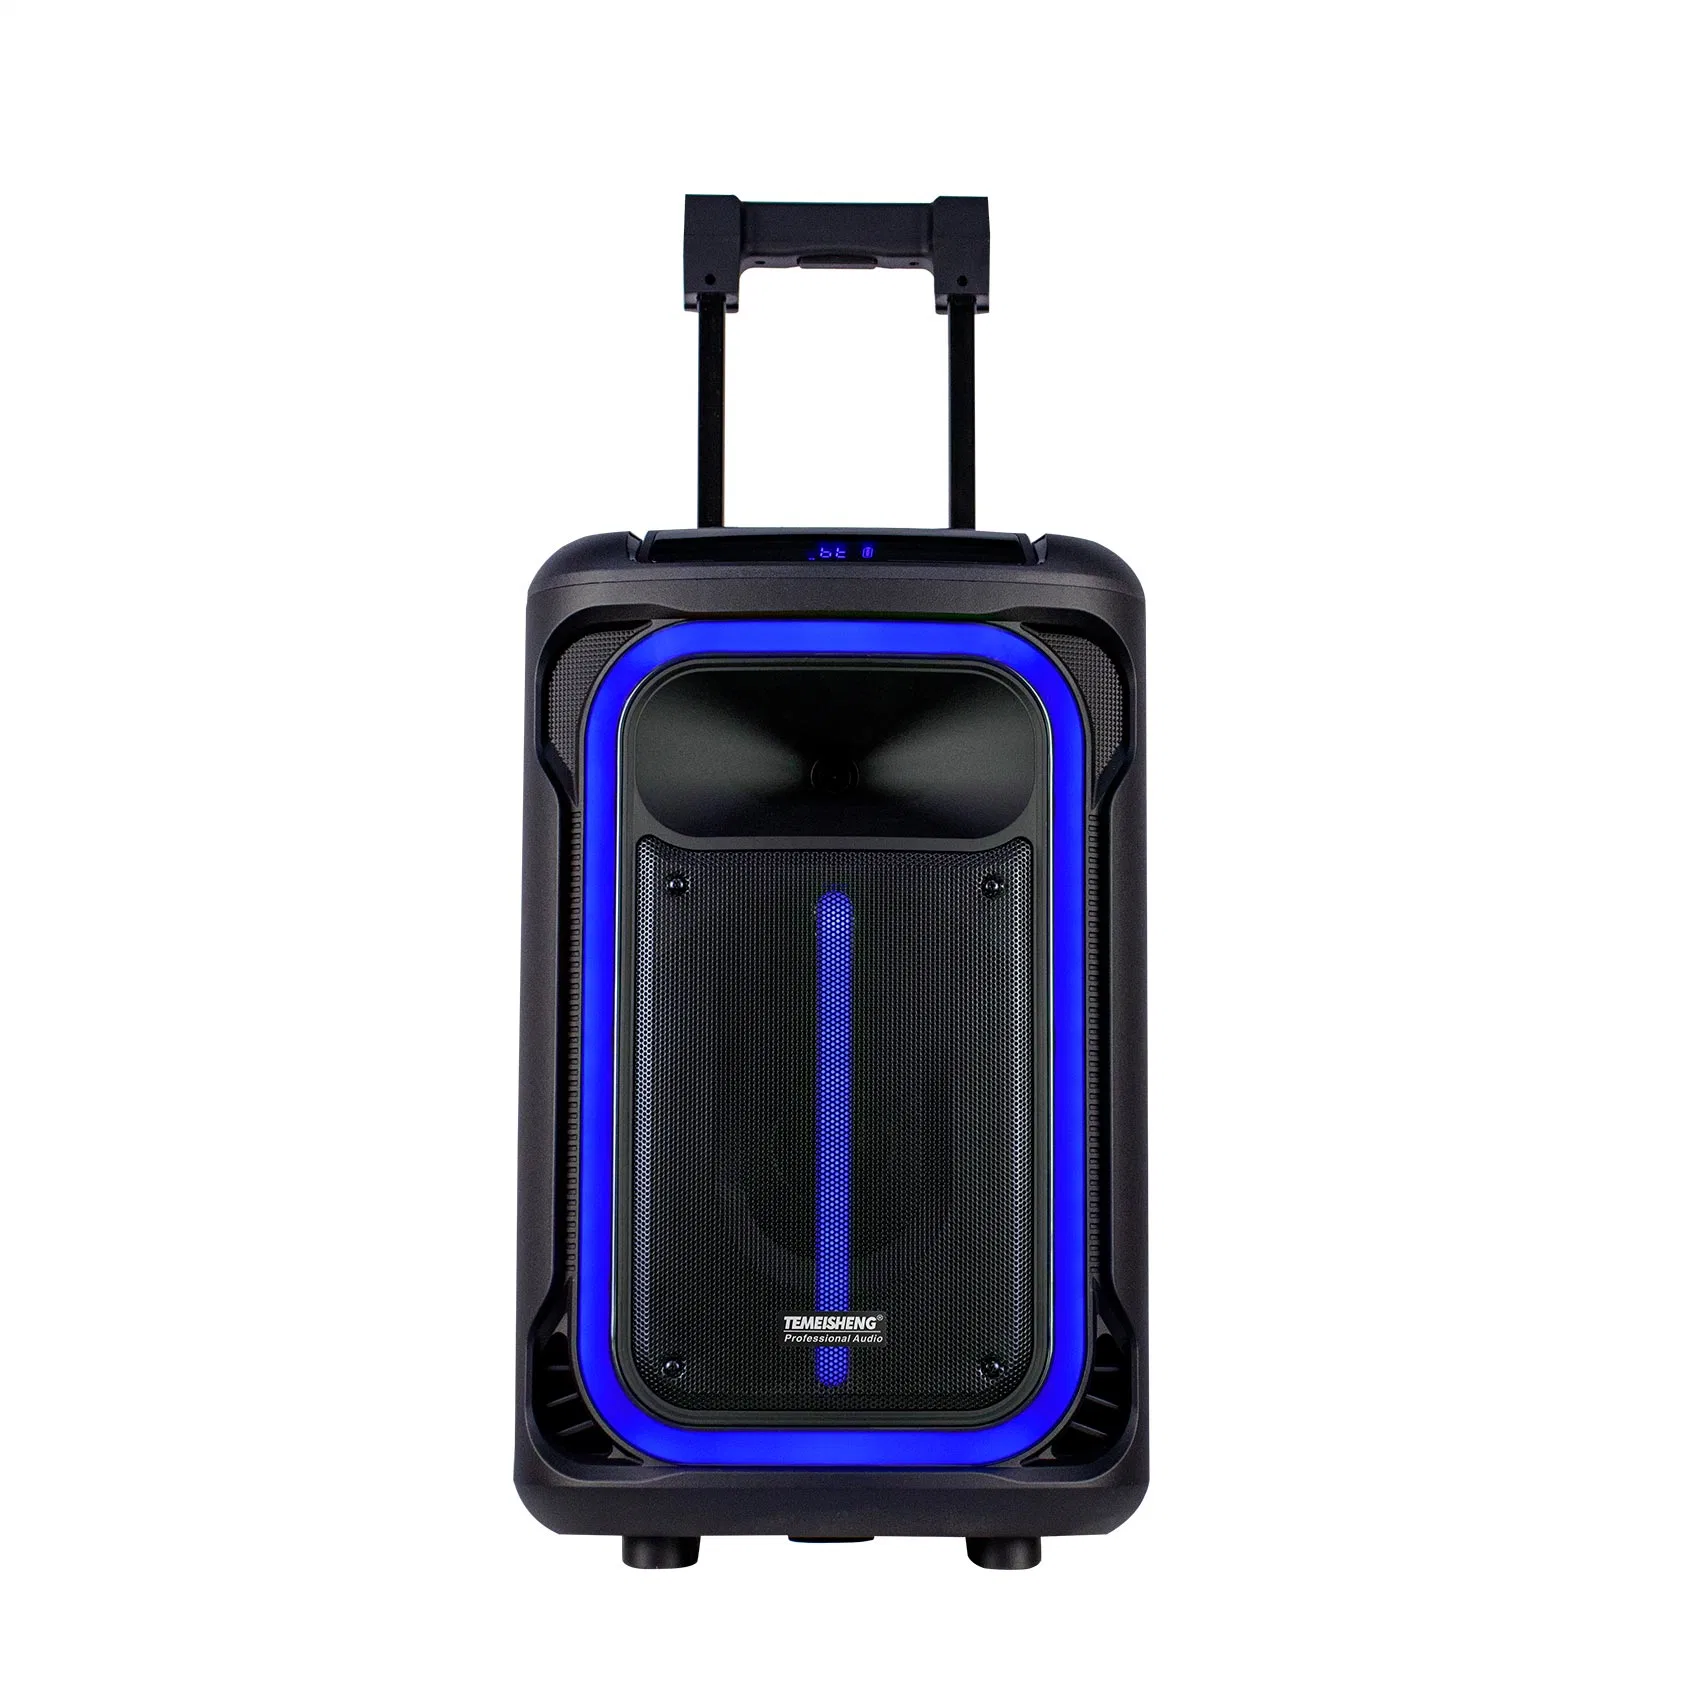 Temeisheng/Lagnting/OEM Hot Selling New Model 12inch Trolley Portable Speaker with New Style Light Active Speaker Bluetooth Speaker